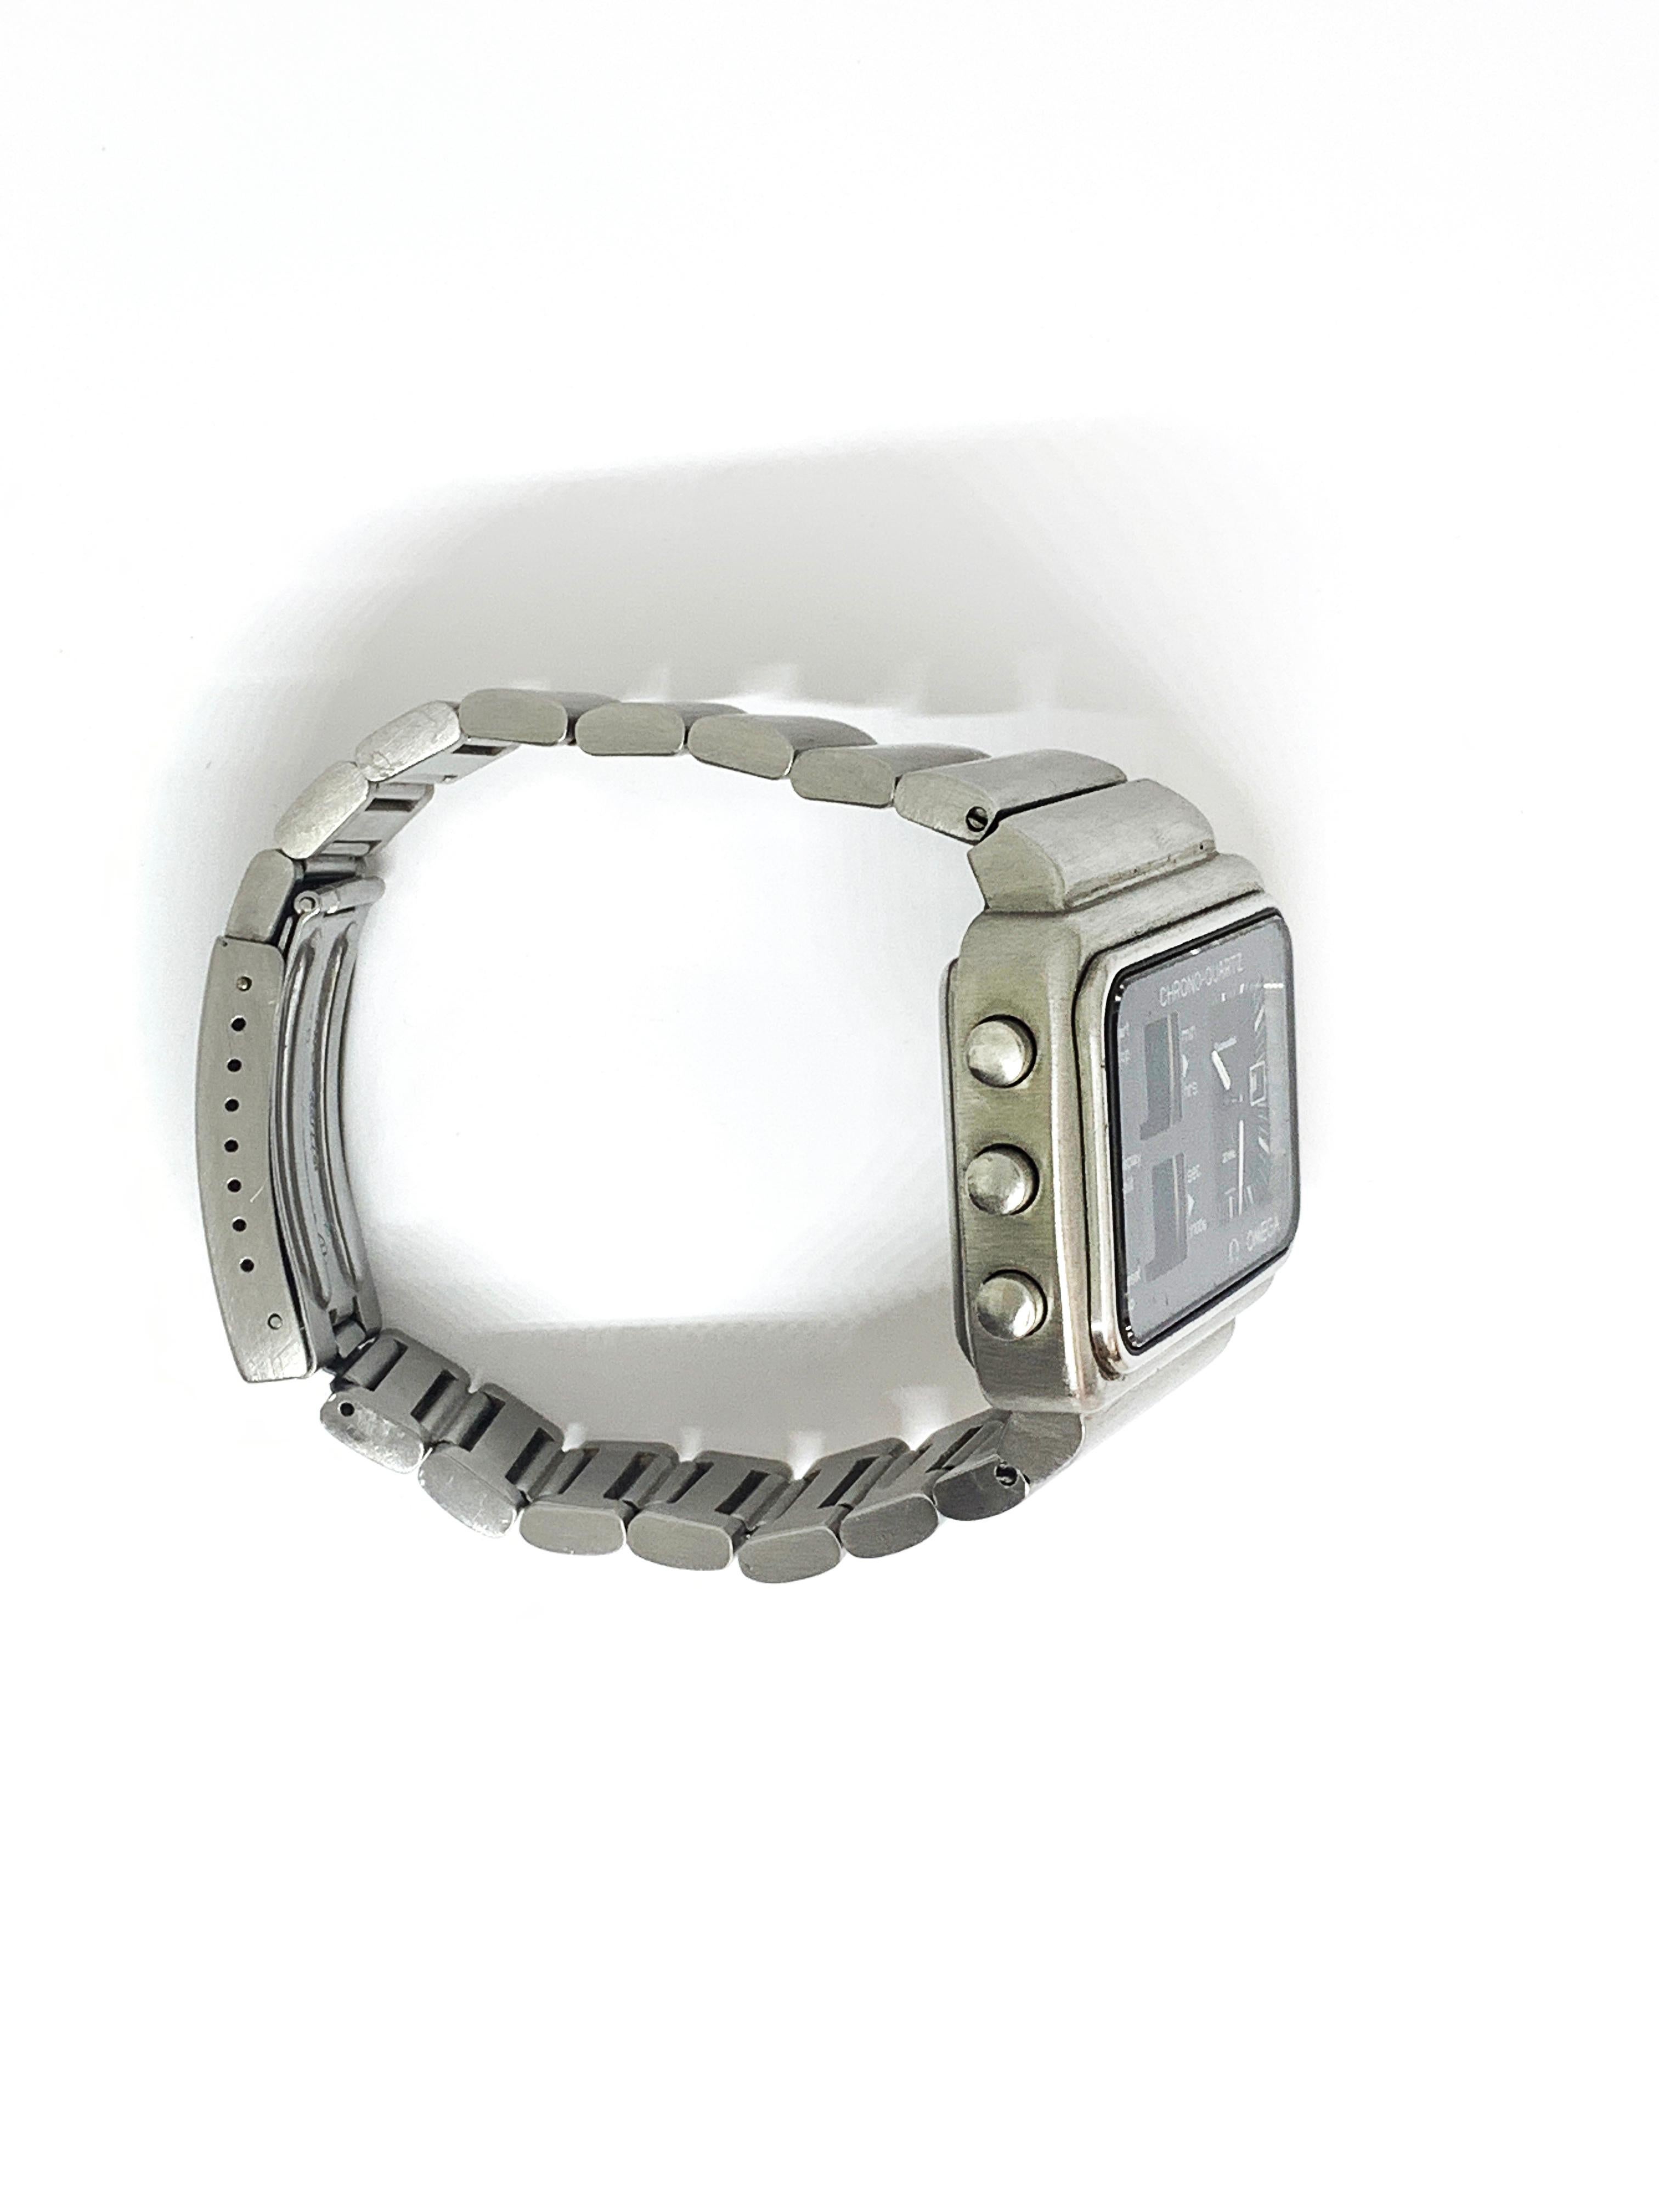 erste digitale armbanduhr 1972